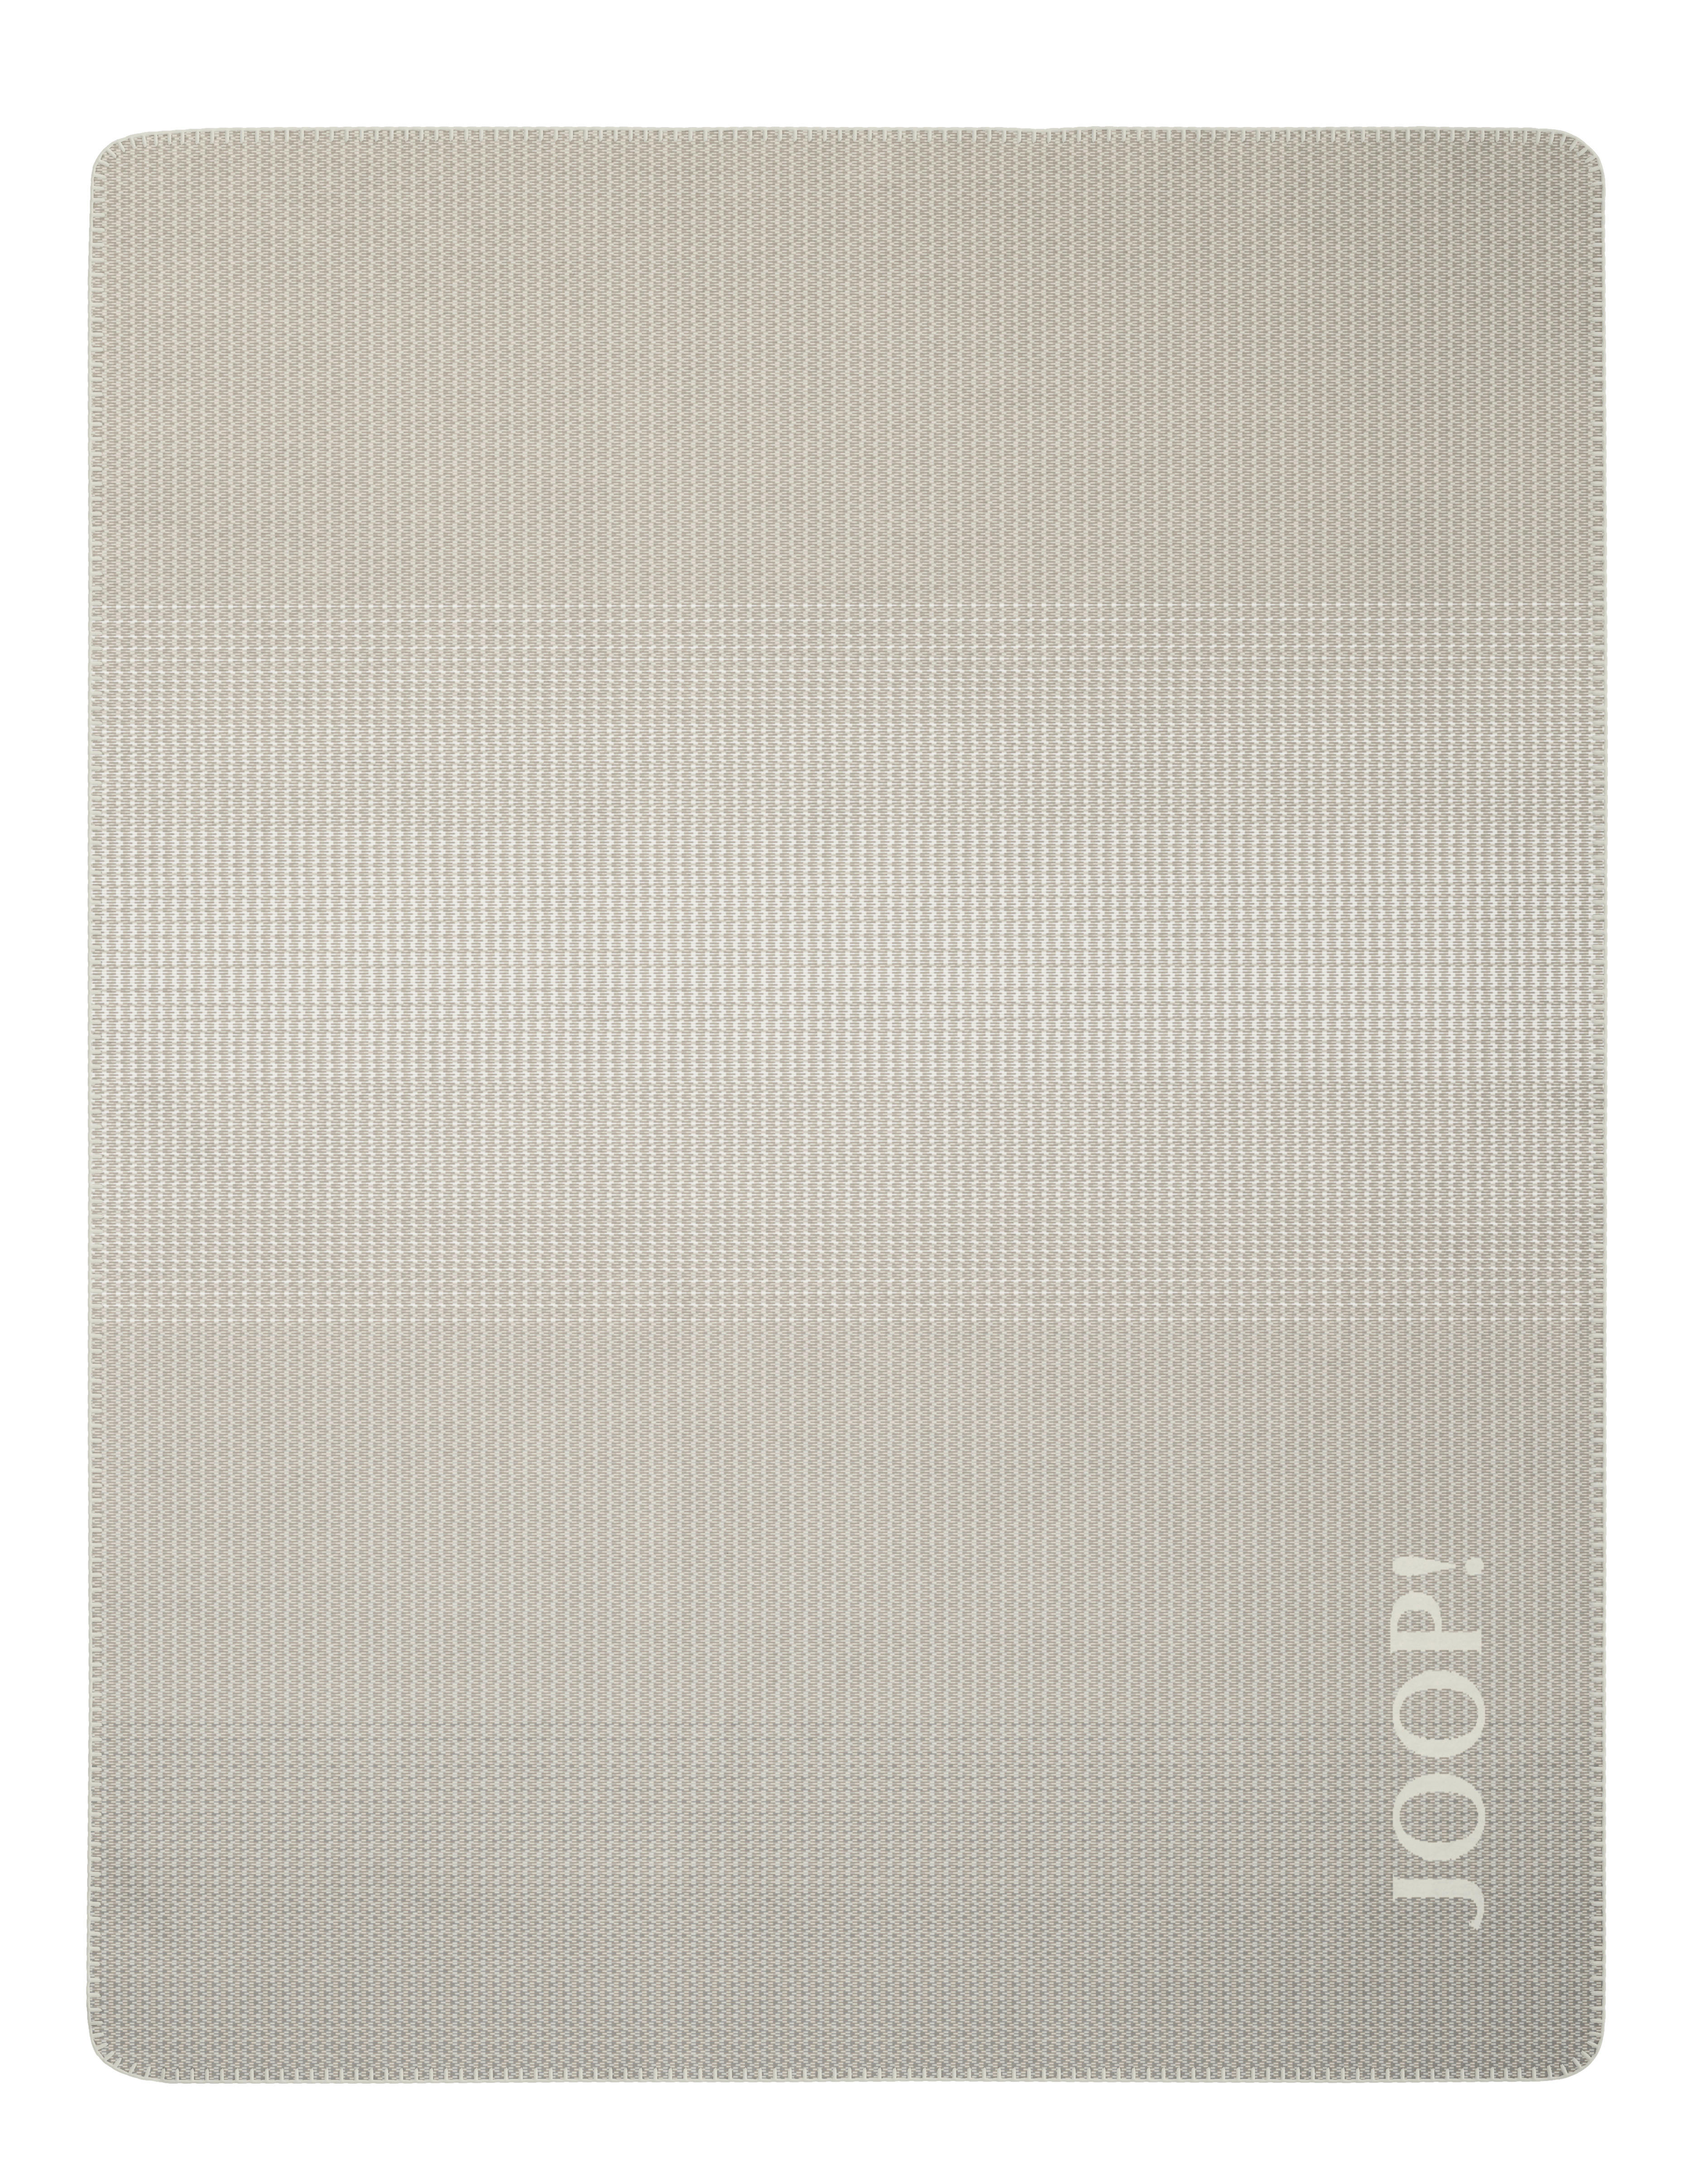 WOHNDECKE Woven 150/200 cm  - Creme, Design, Textil (150/200cm) - Joop!